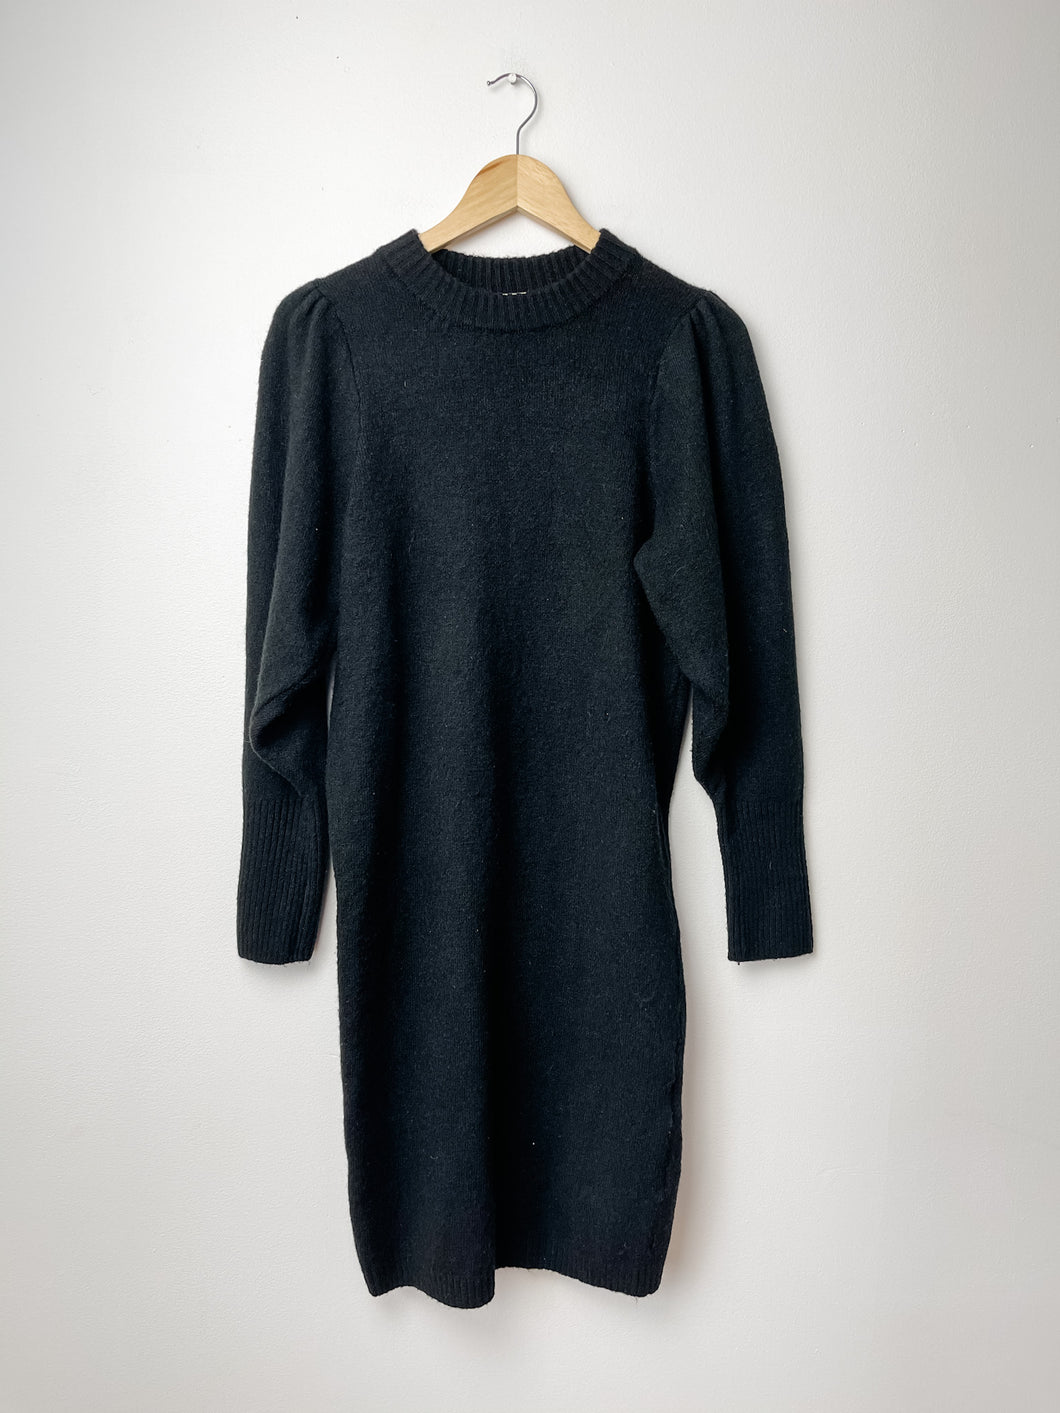 Maternity Black H&M Sweater Dress Size Medium